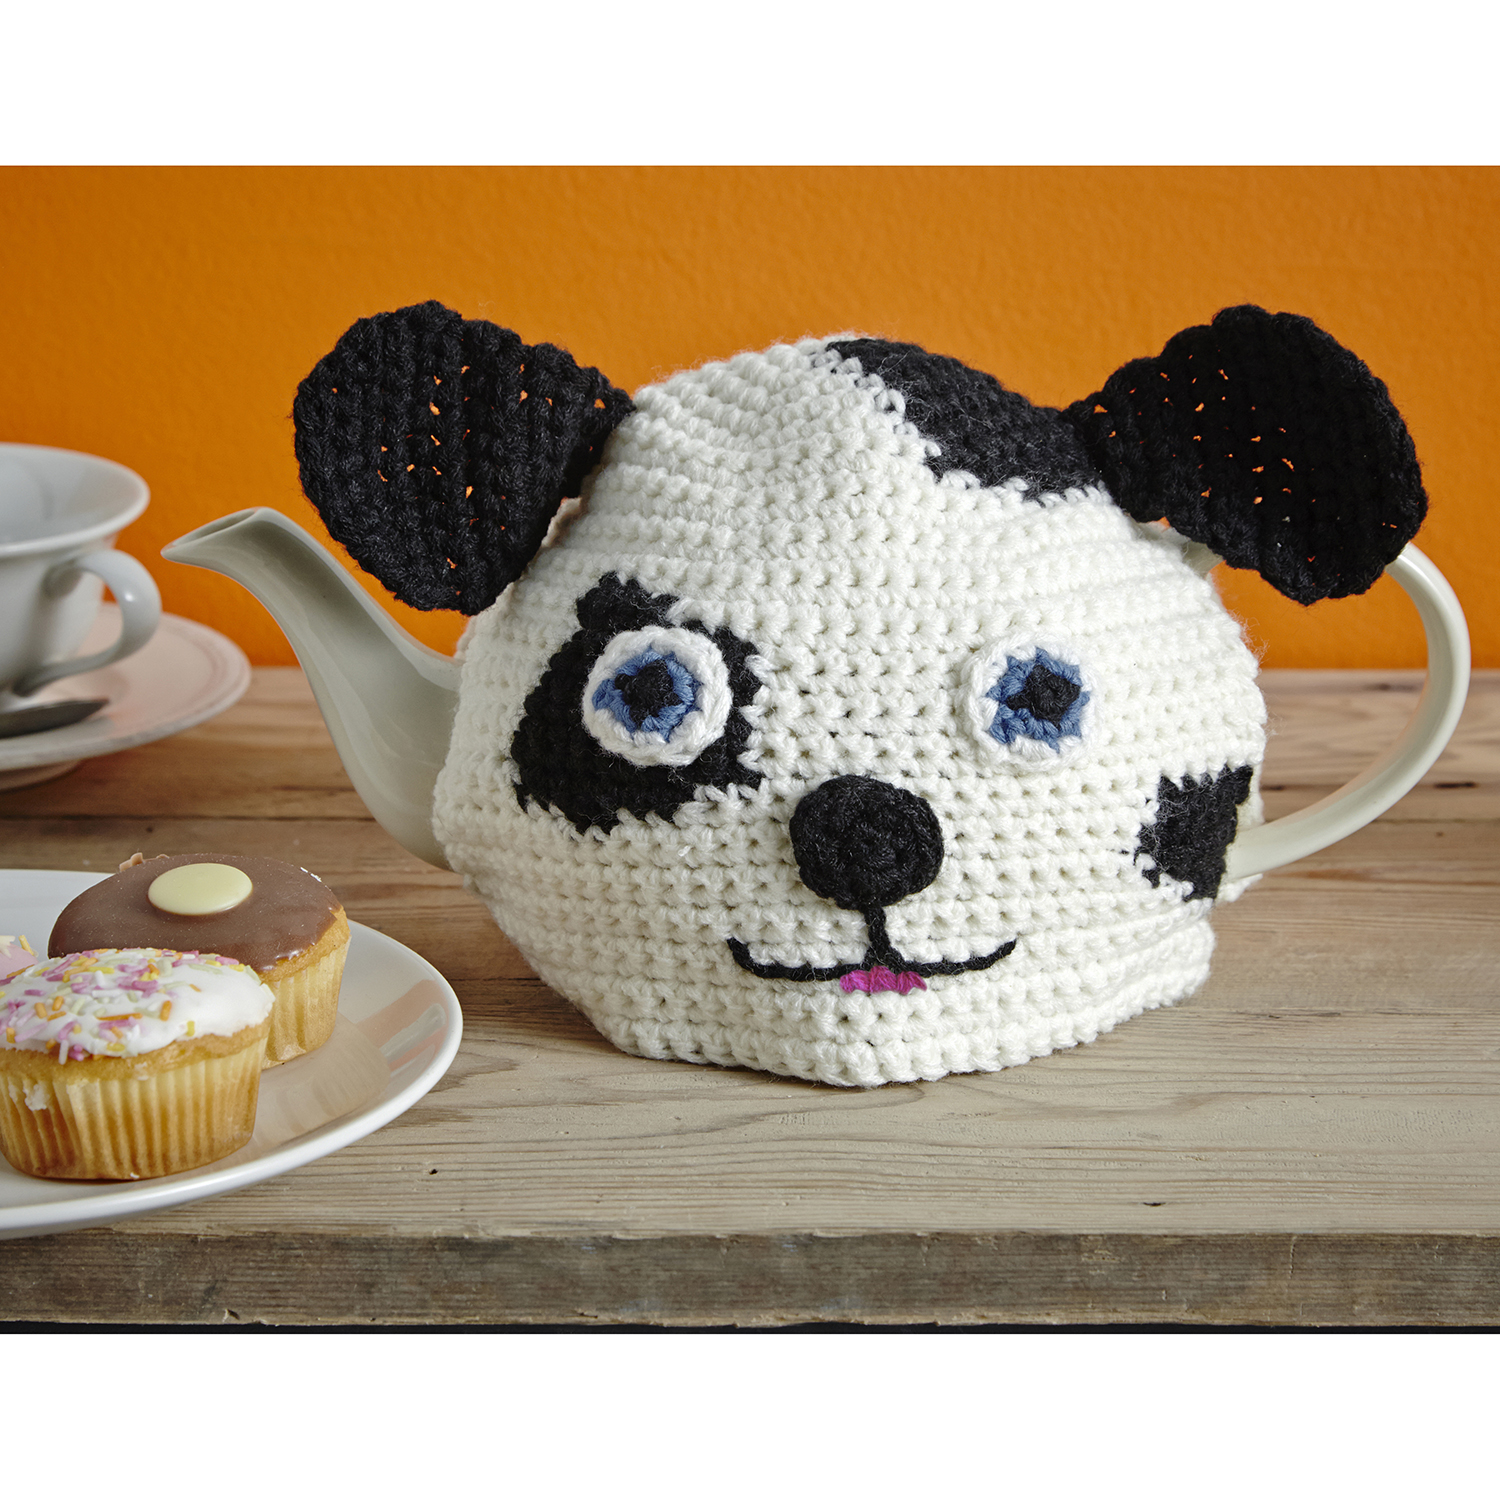 Knitted Tea Cozy - Spotty Dog, photo-1